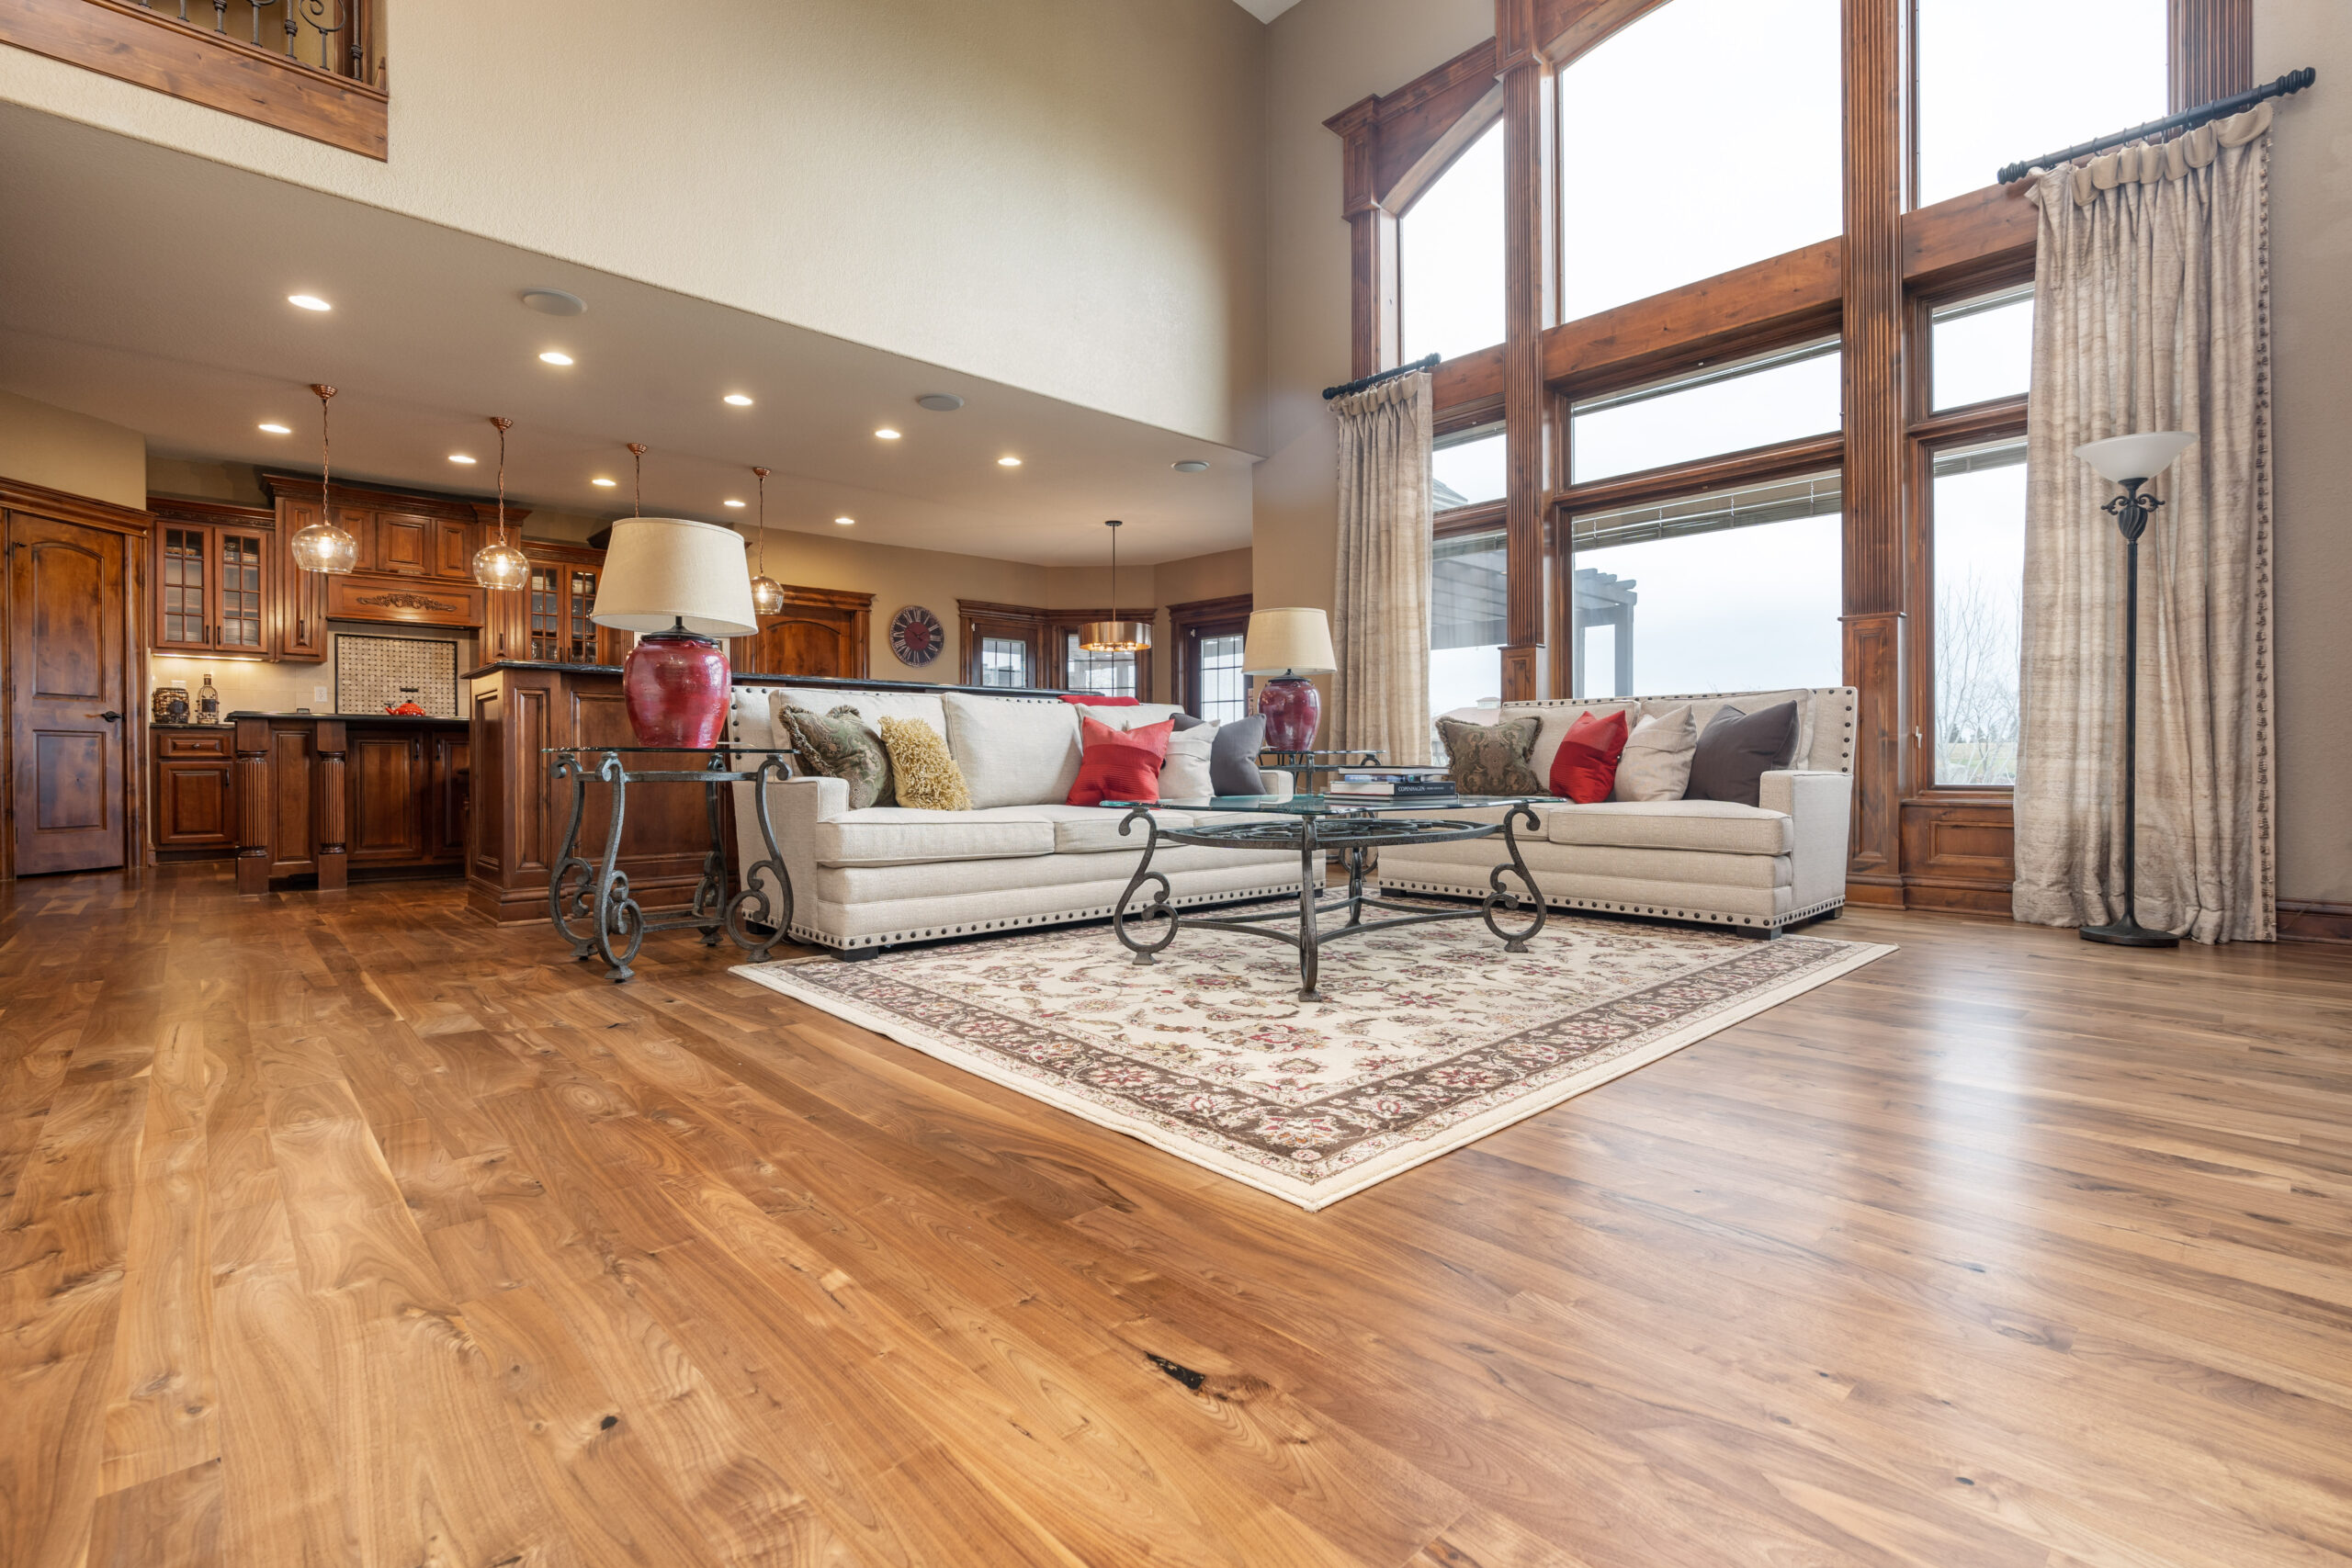 living room with shiny hardwood floors and an area rug